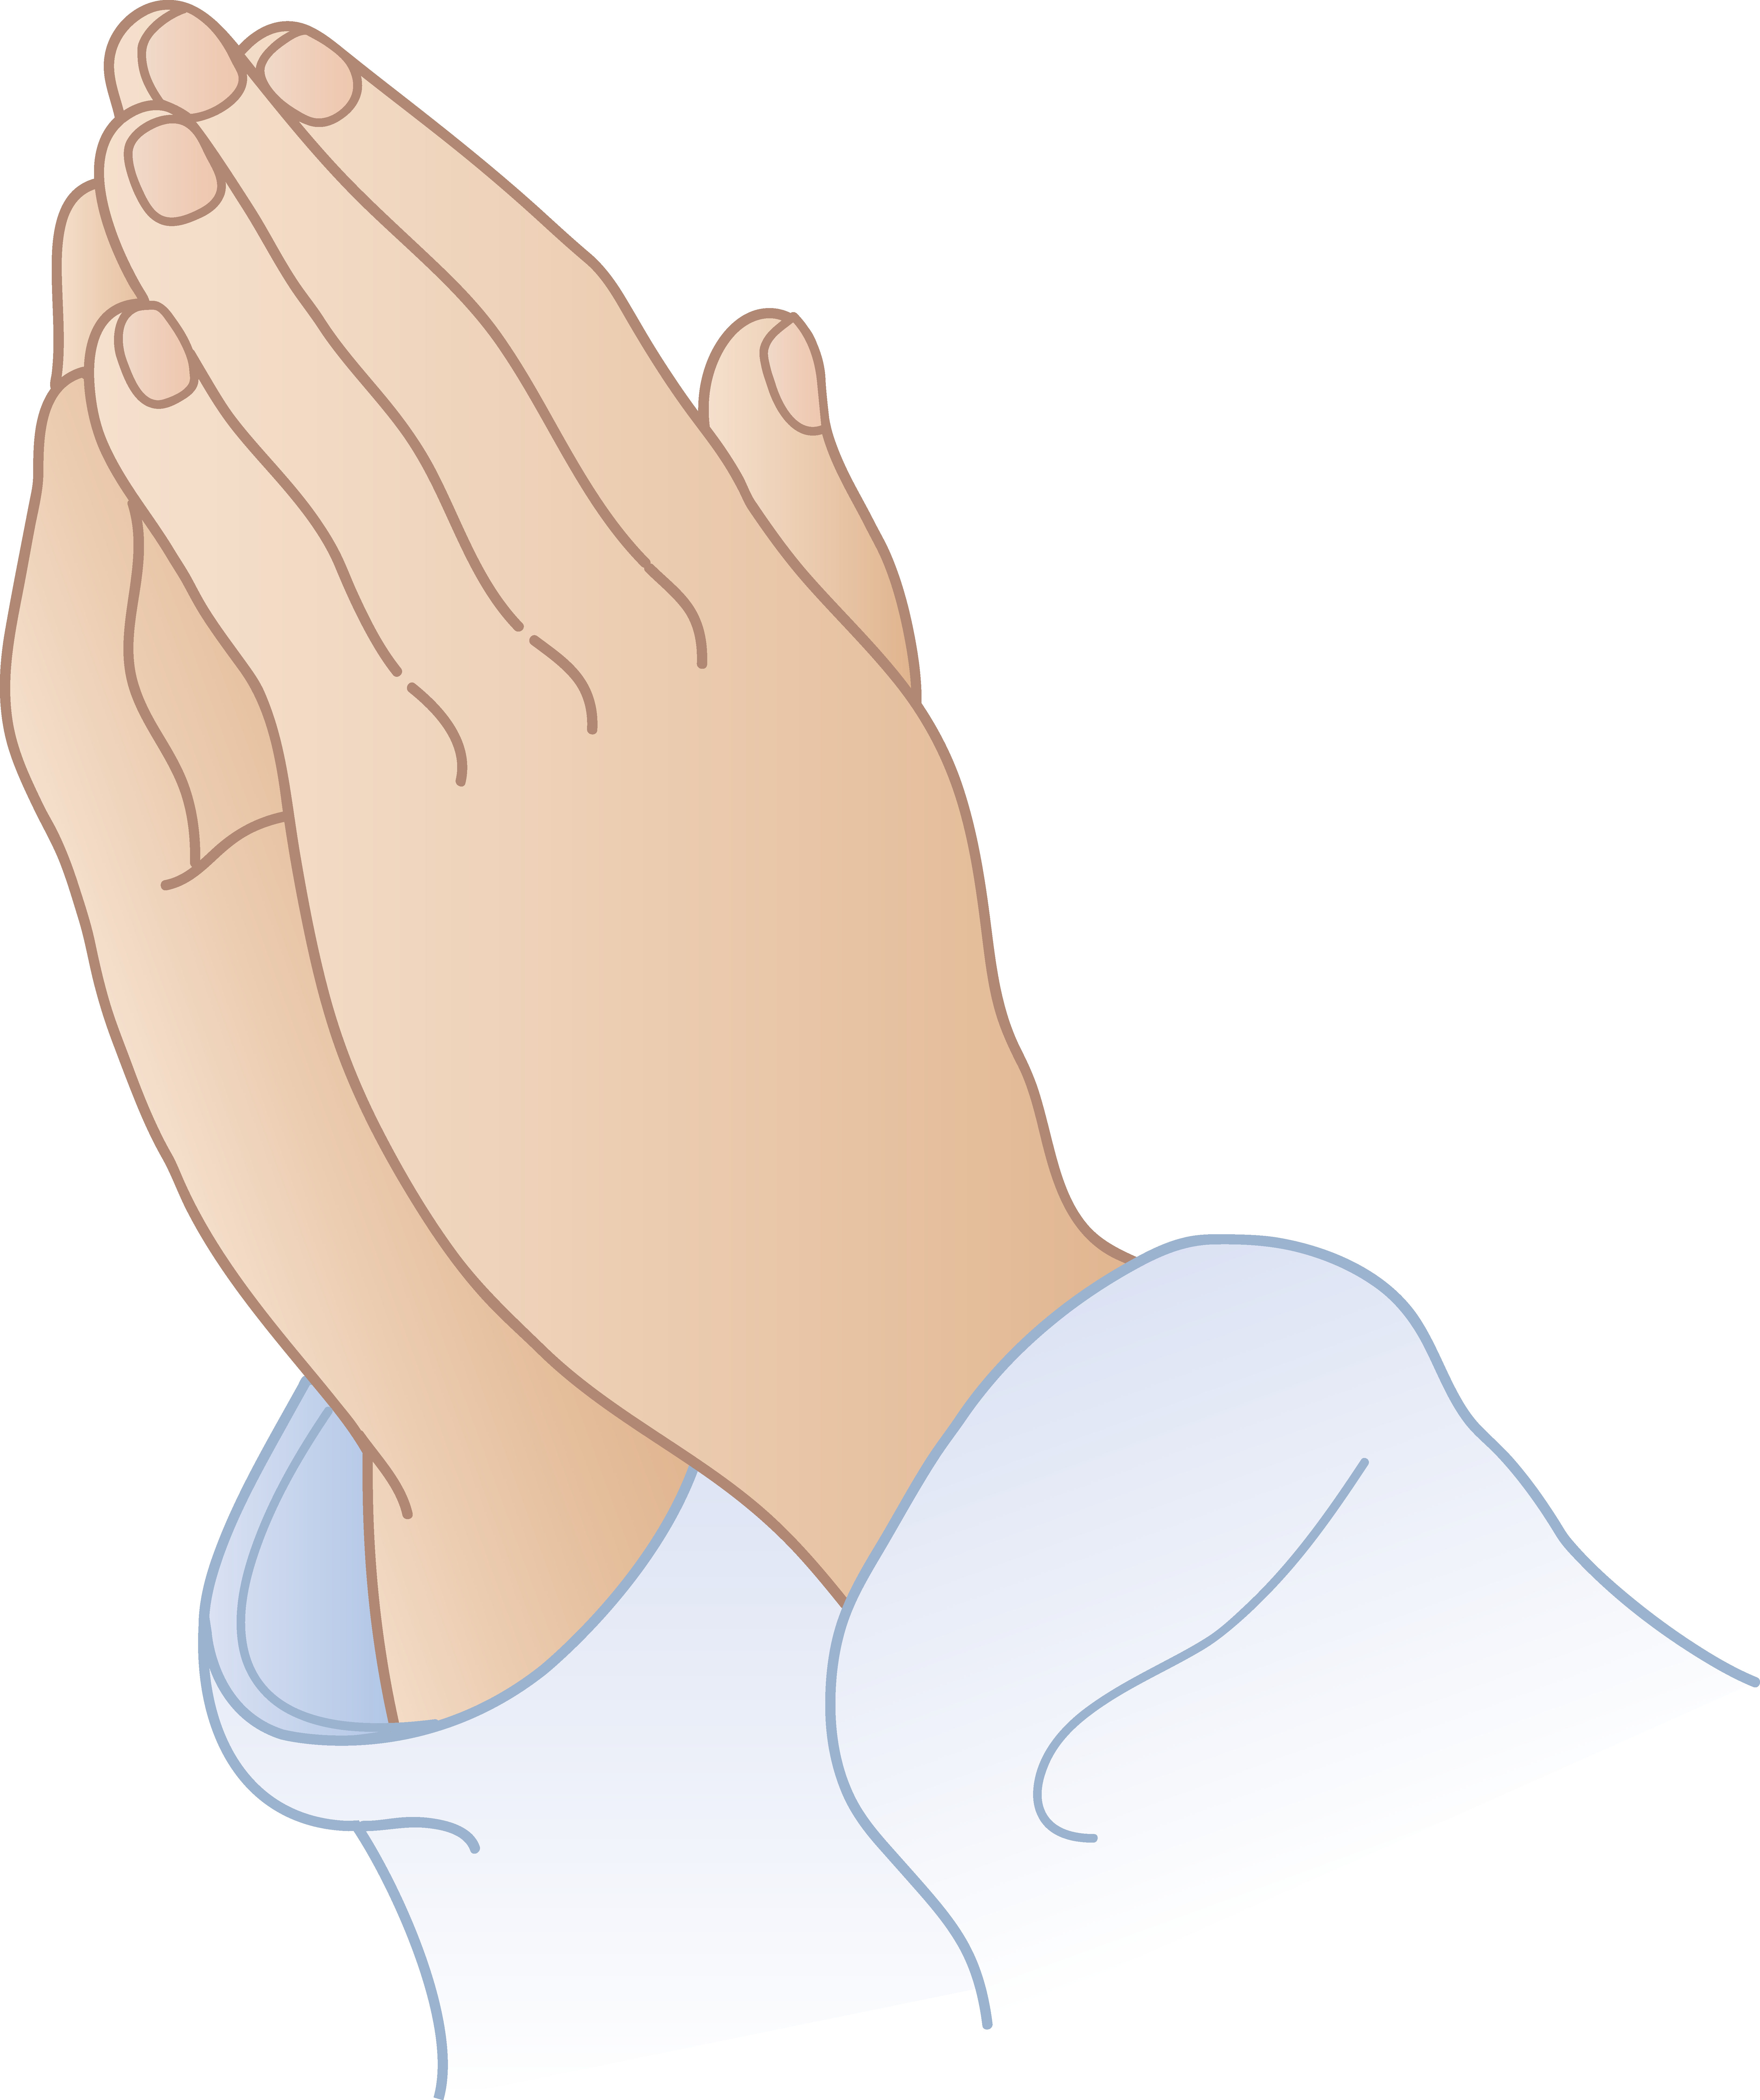 Praying Hands Cartoon | Free Download Clip Art | Free Clip Art ...